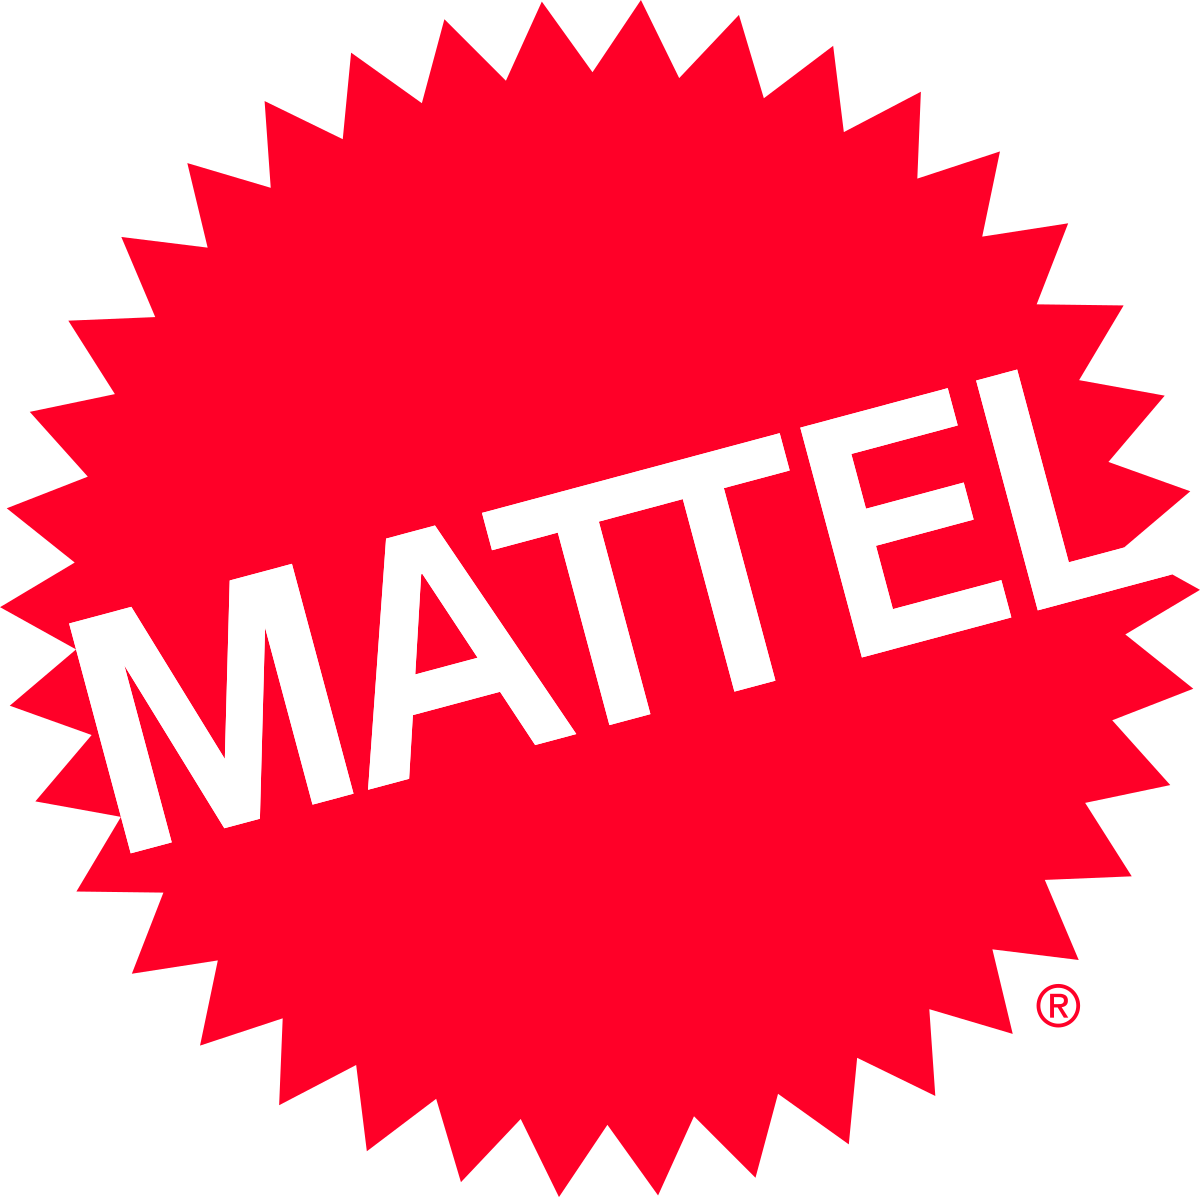 Mattel Inc.